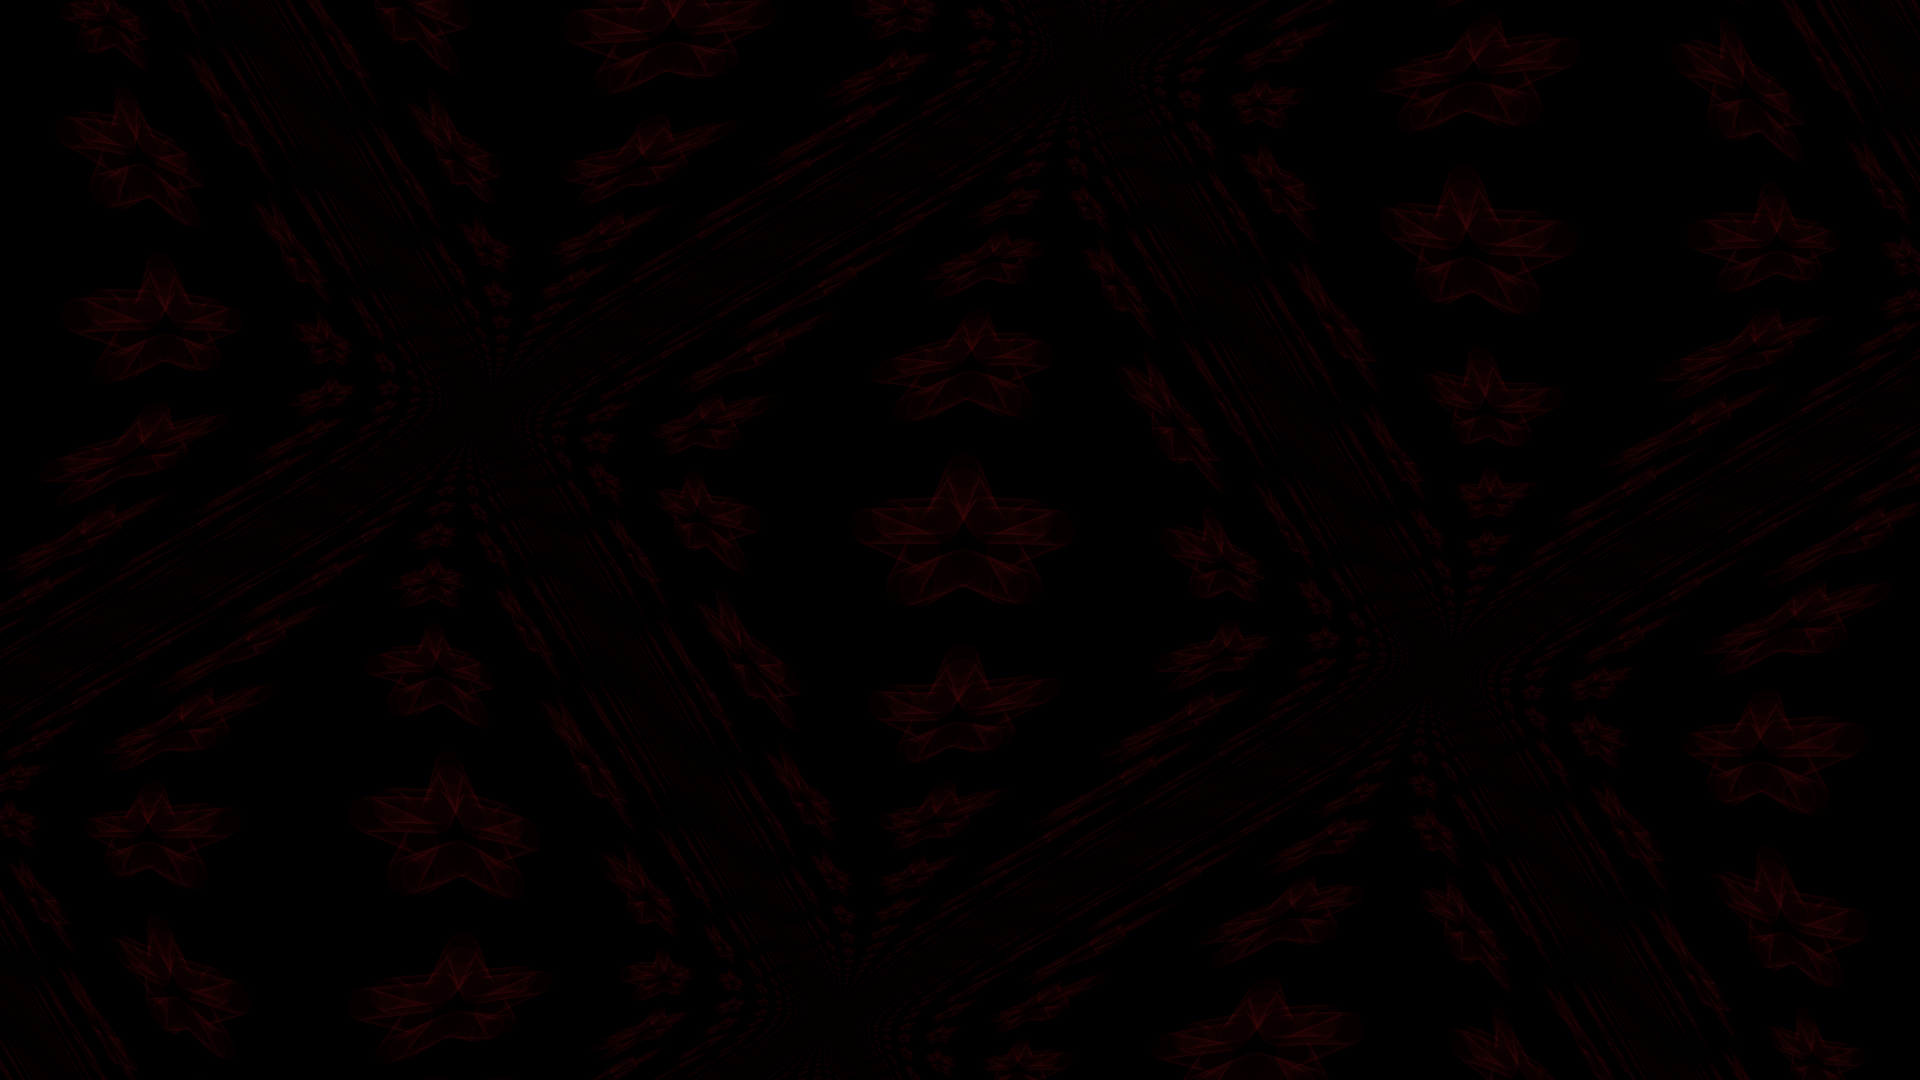 Black and Red wallpaper 1920x1080 by Eliittihemuli on DeviantArt